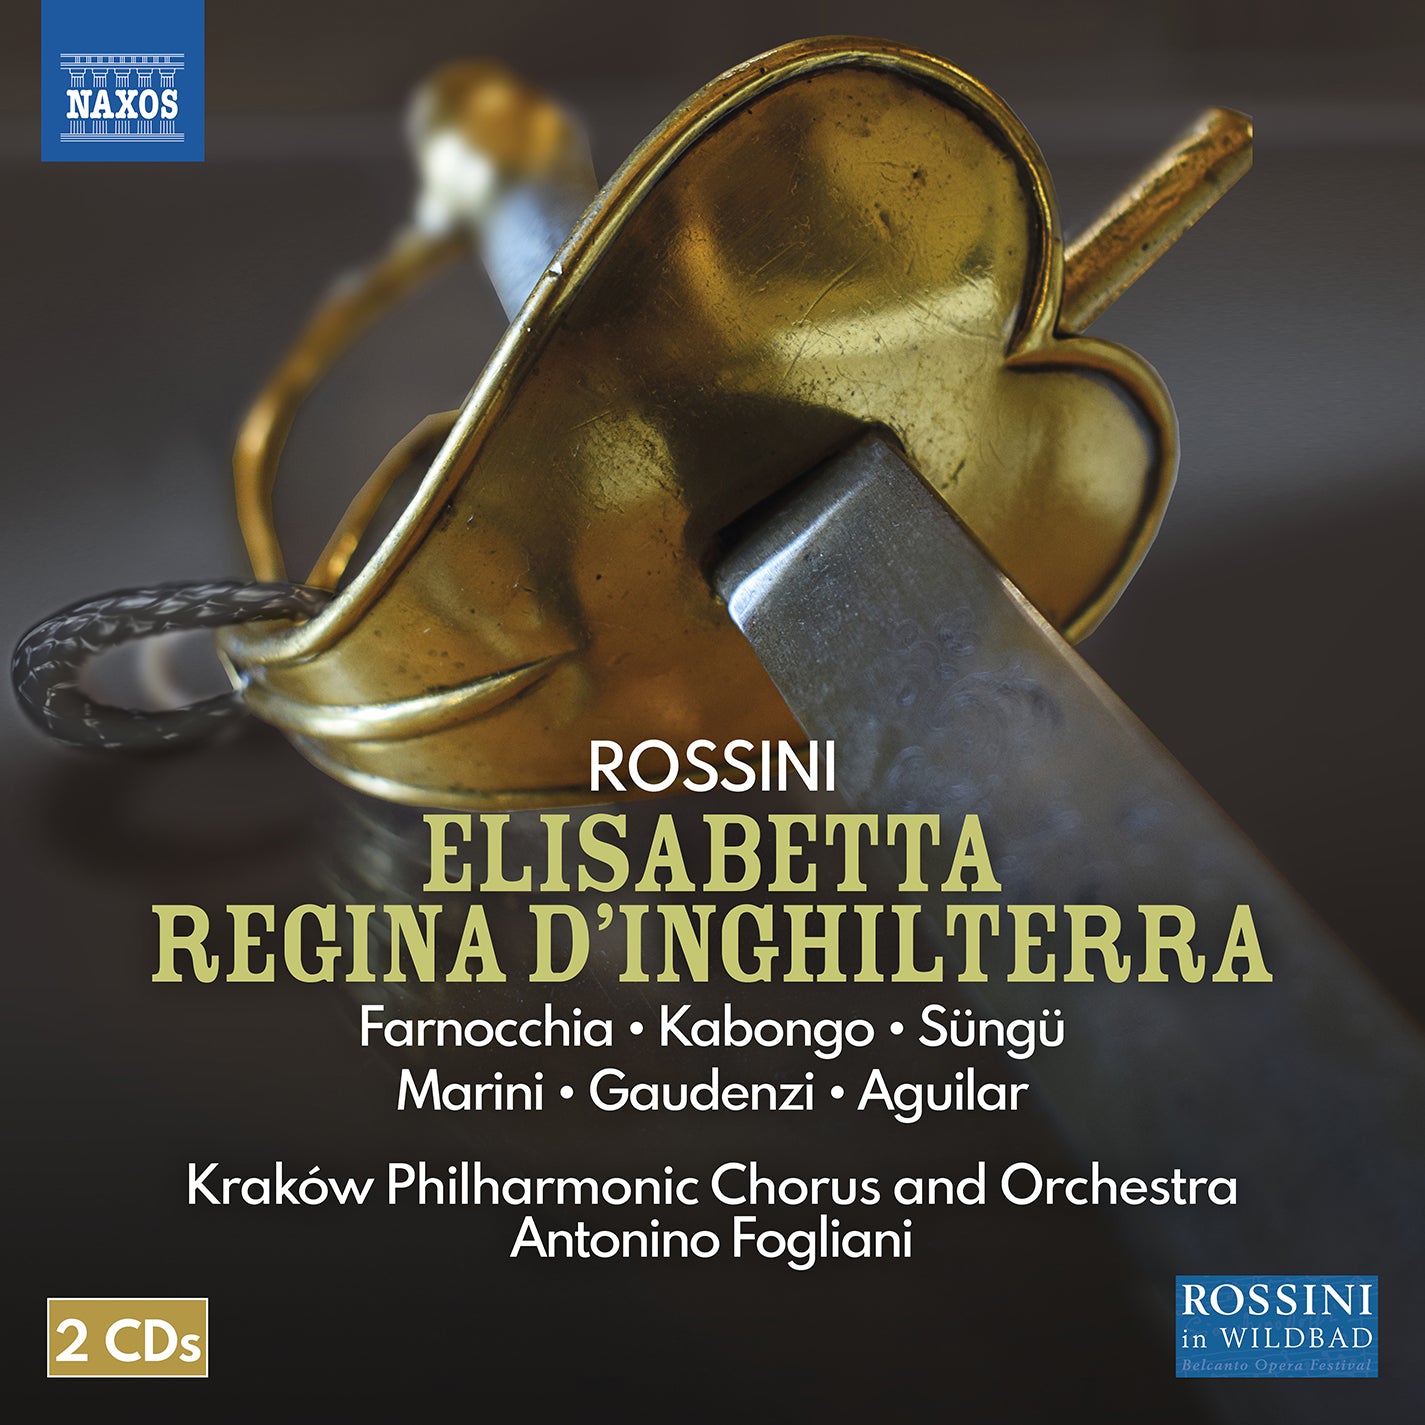 Rossini: Elisabetta regina d’inghilterra / Fogliani, Krakow Philharmonic